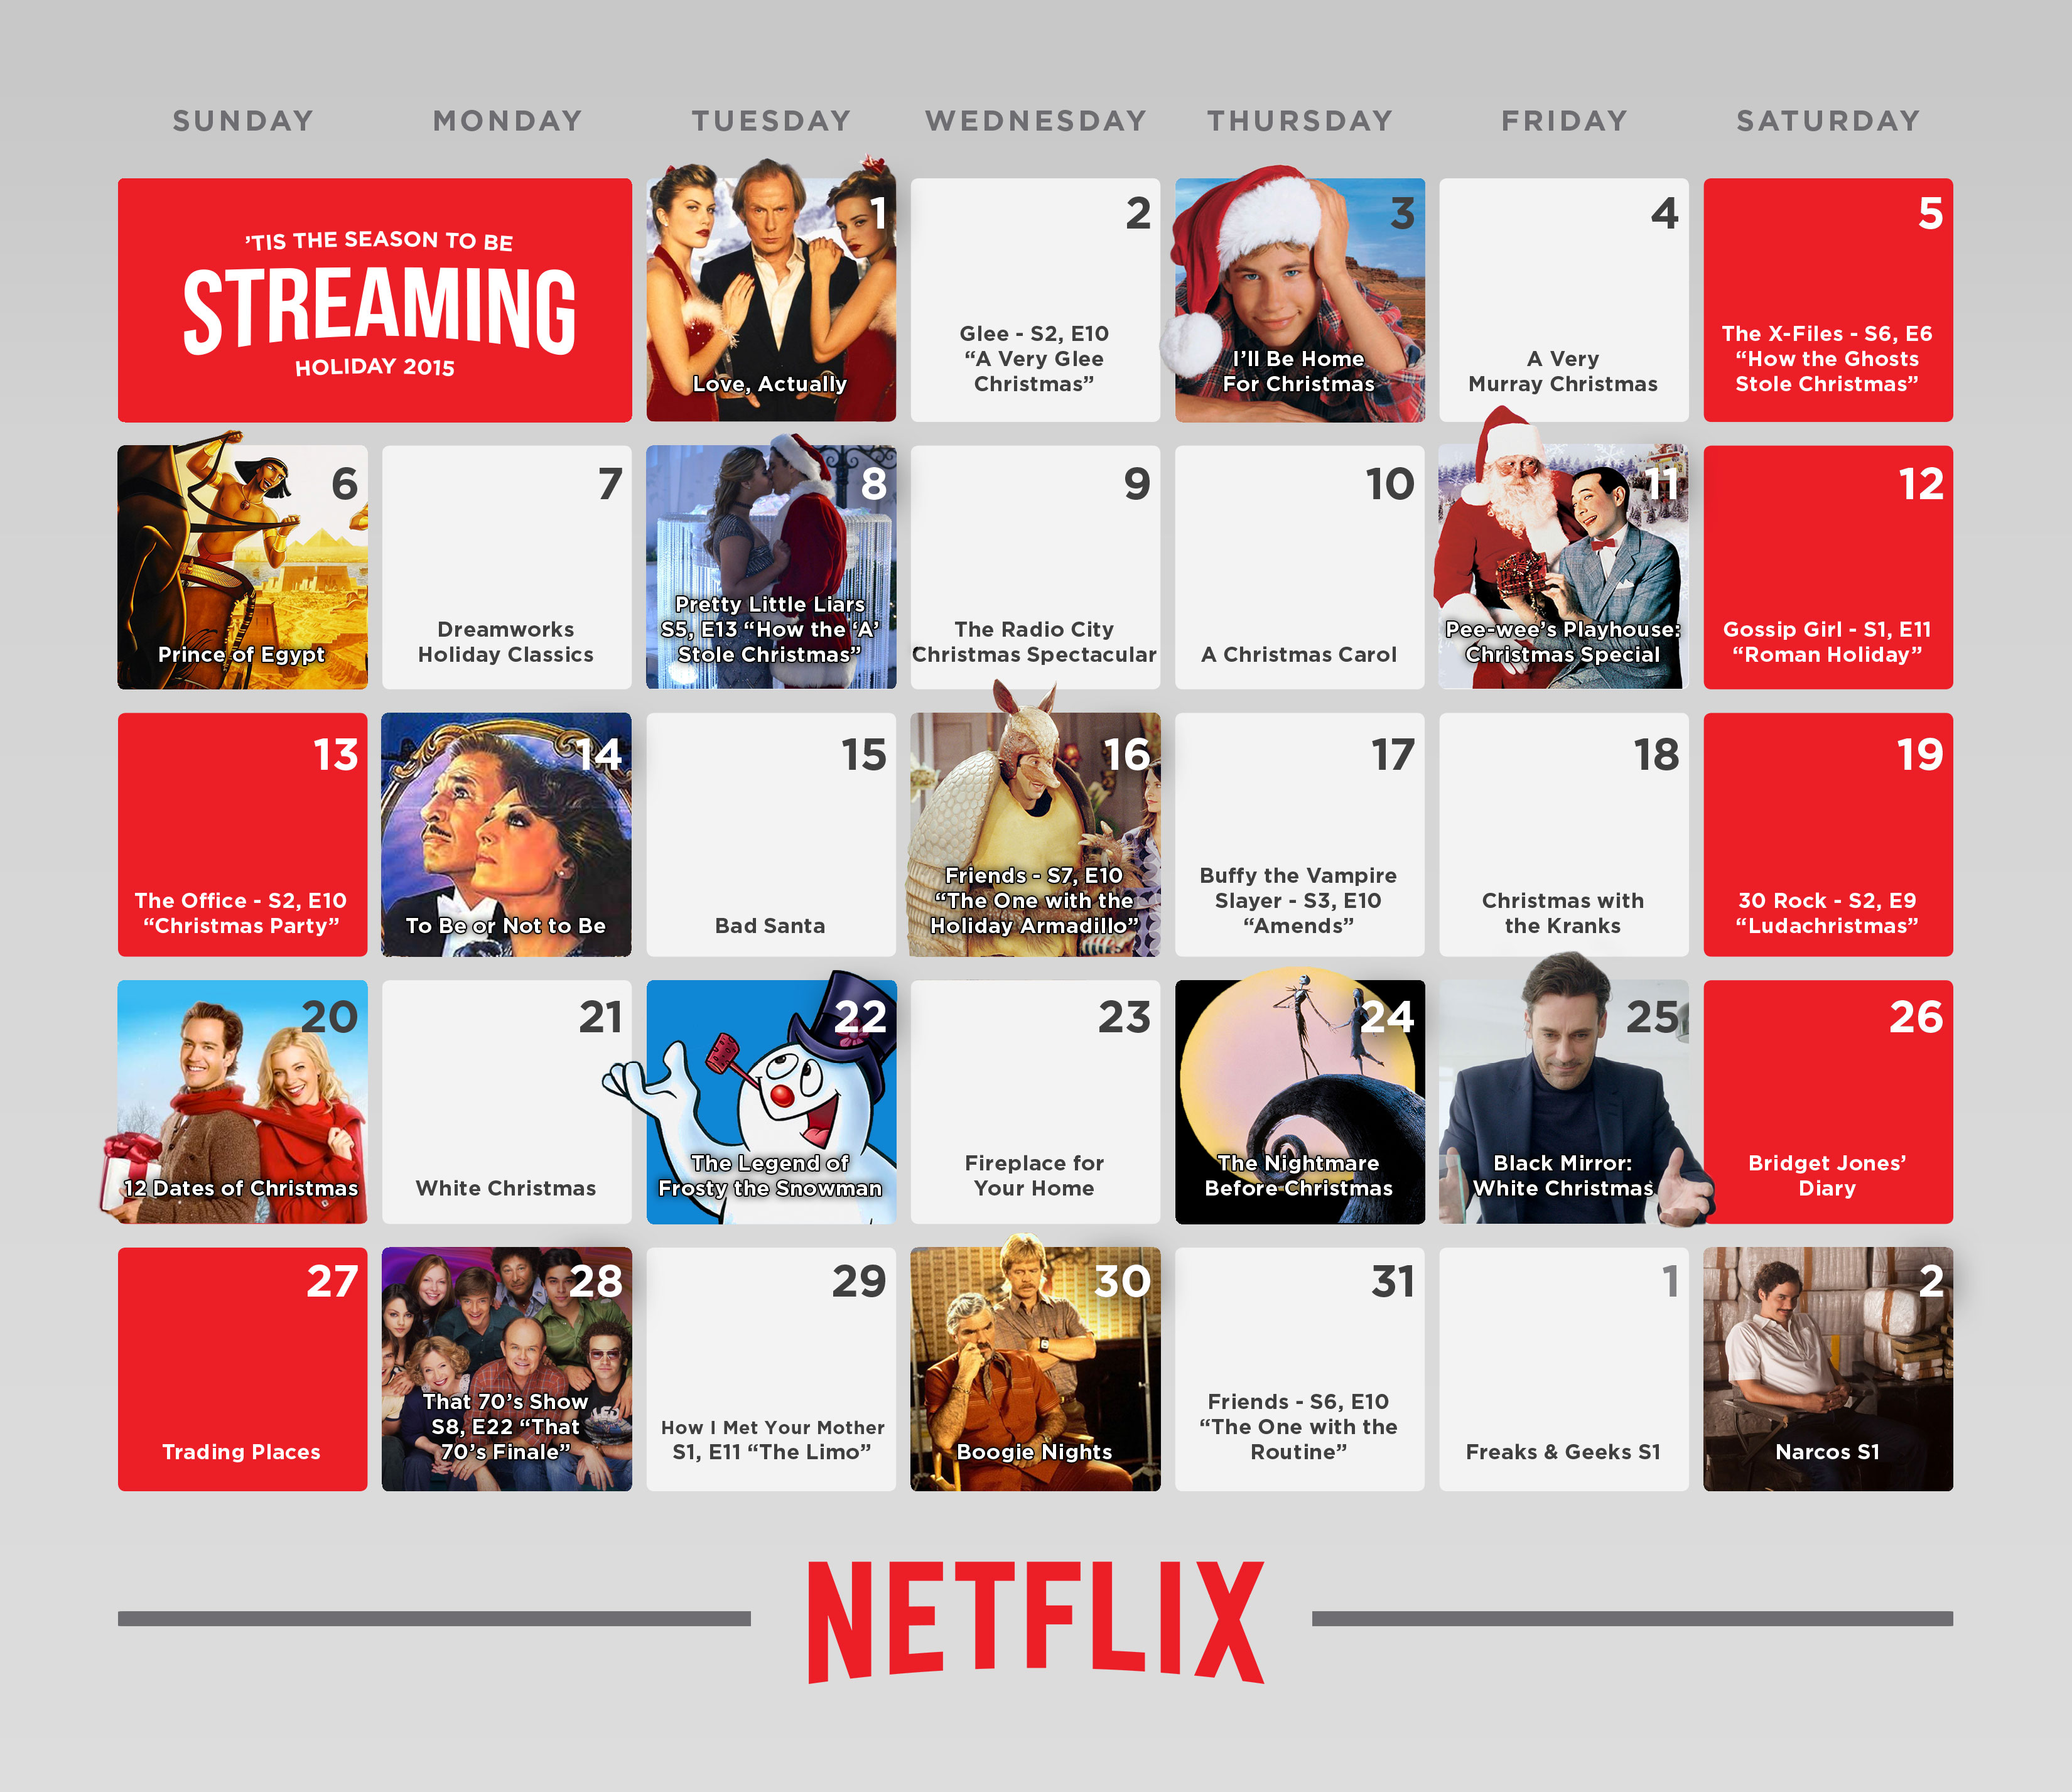 Netflix_HolidayCalendar5